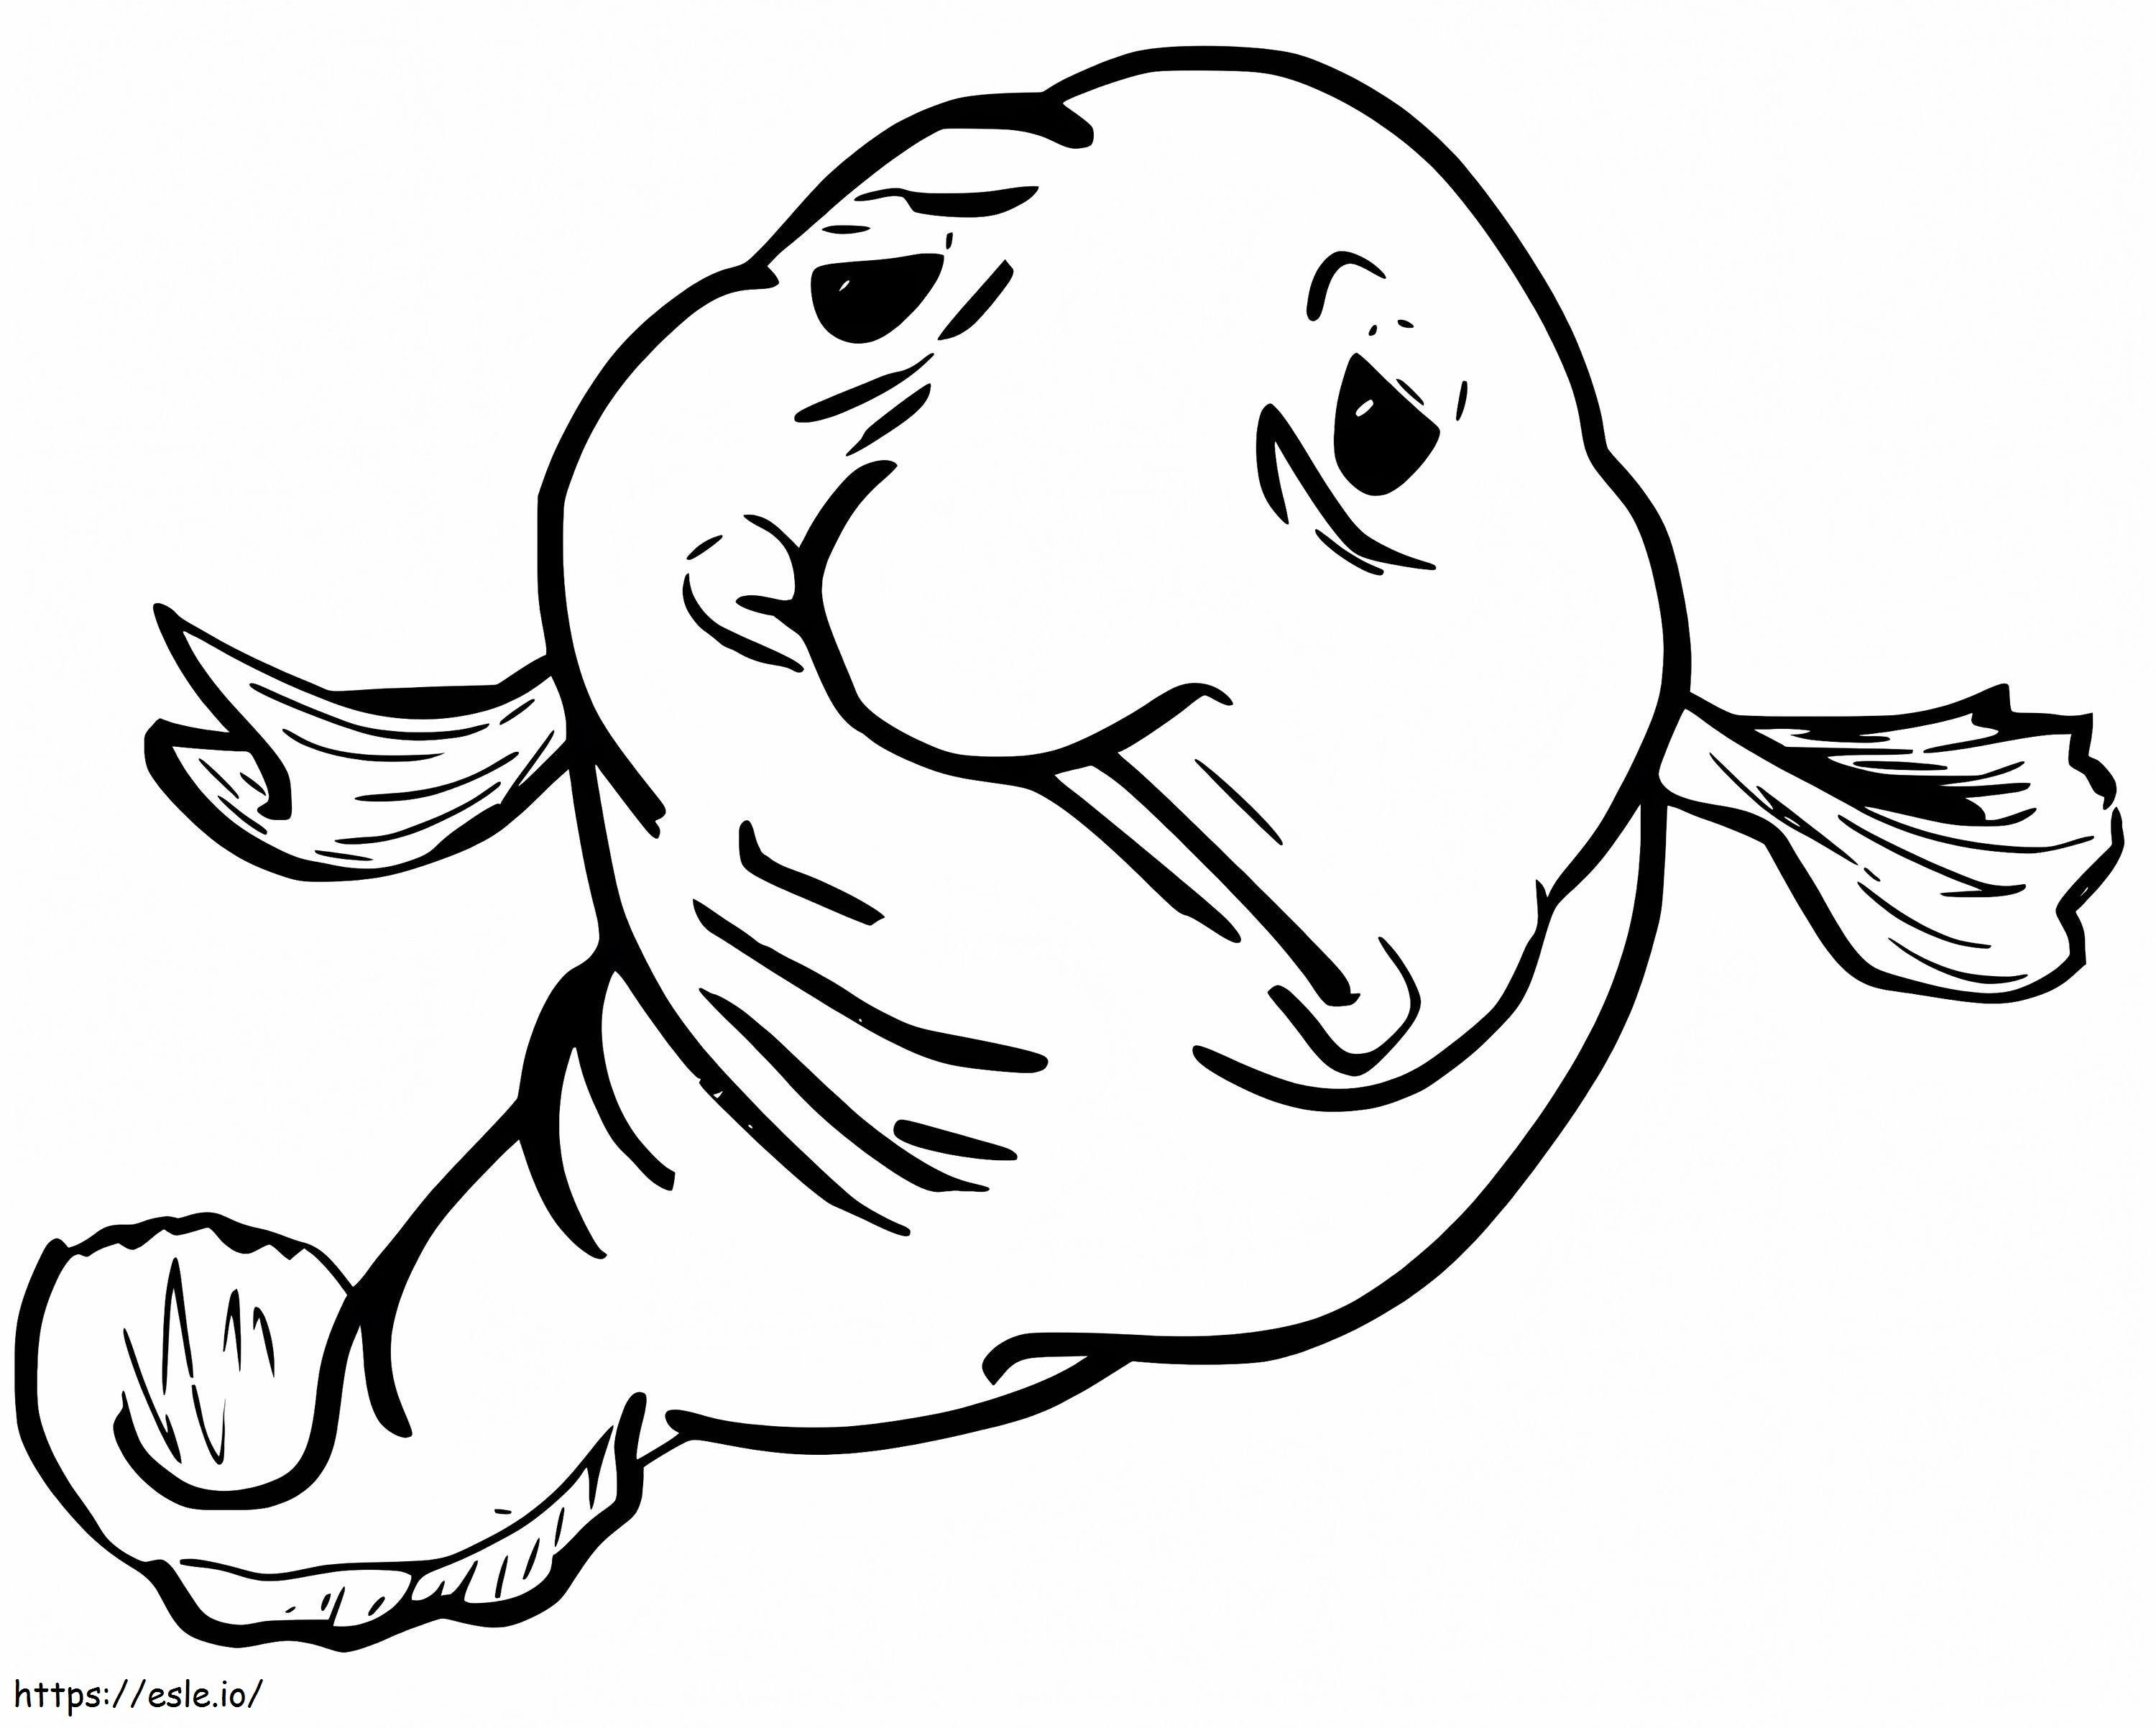 Smutny Blobfish kolorowanka